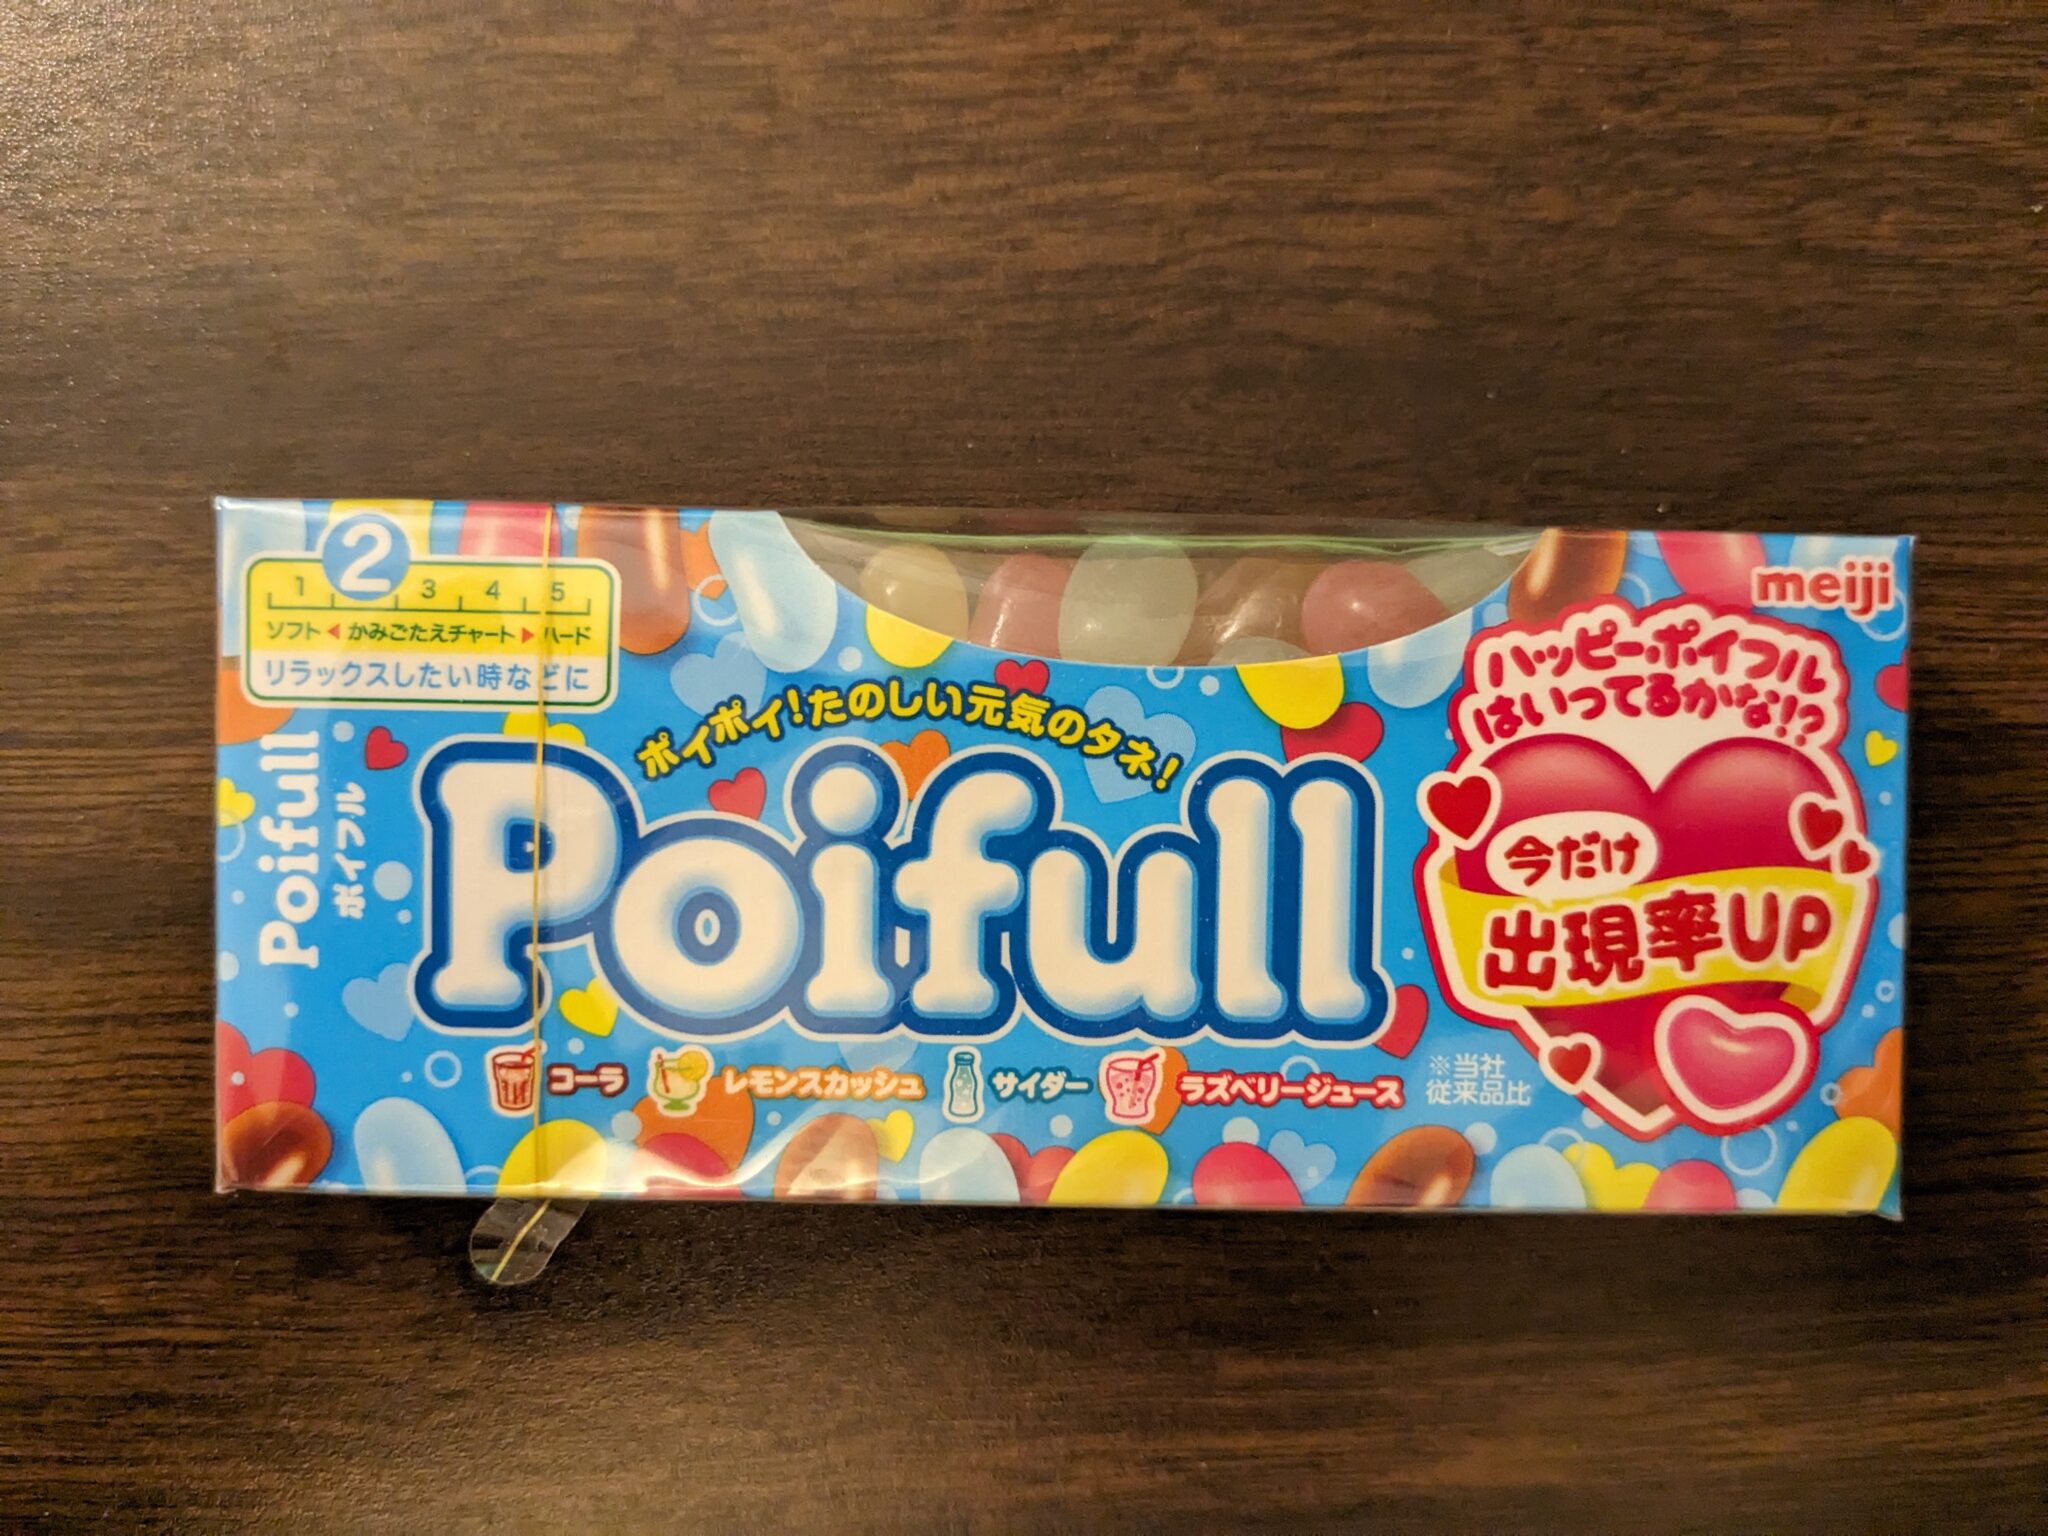 Meiji – Poifull Drink Mix